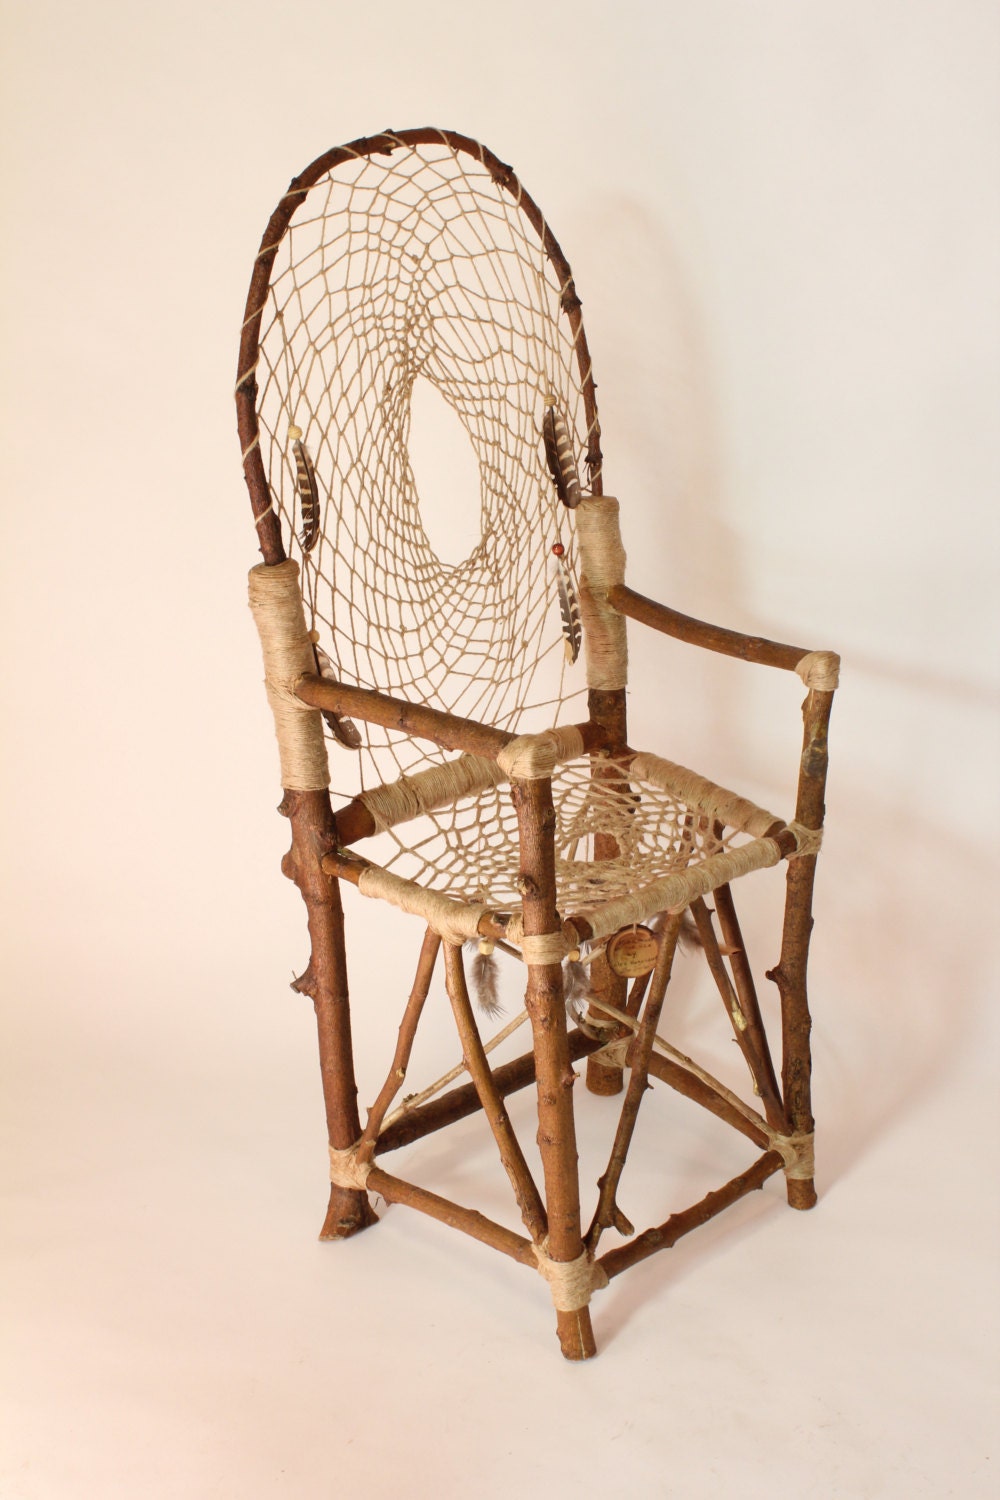 Dream Ca' Chair No.12 Recycled Tree Limb Furniture - AlexHagendorf